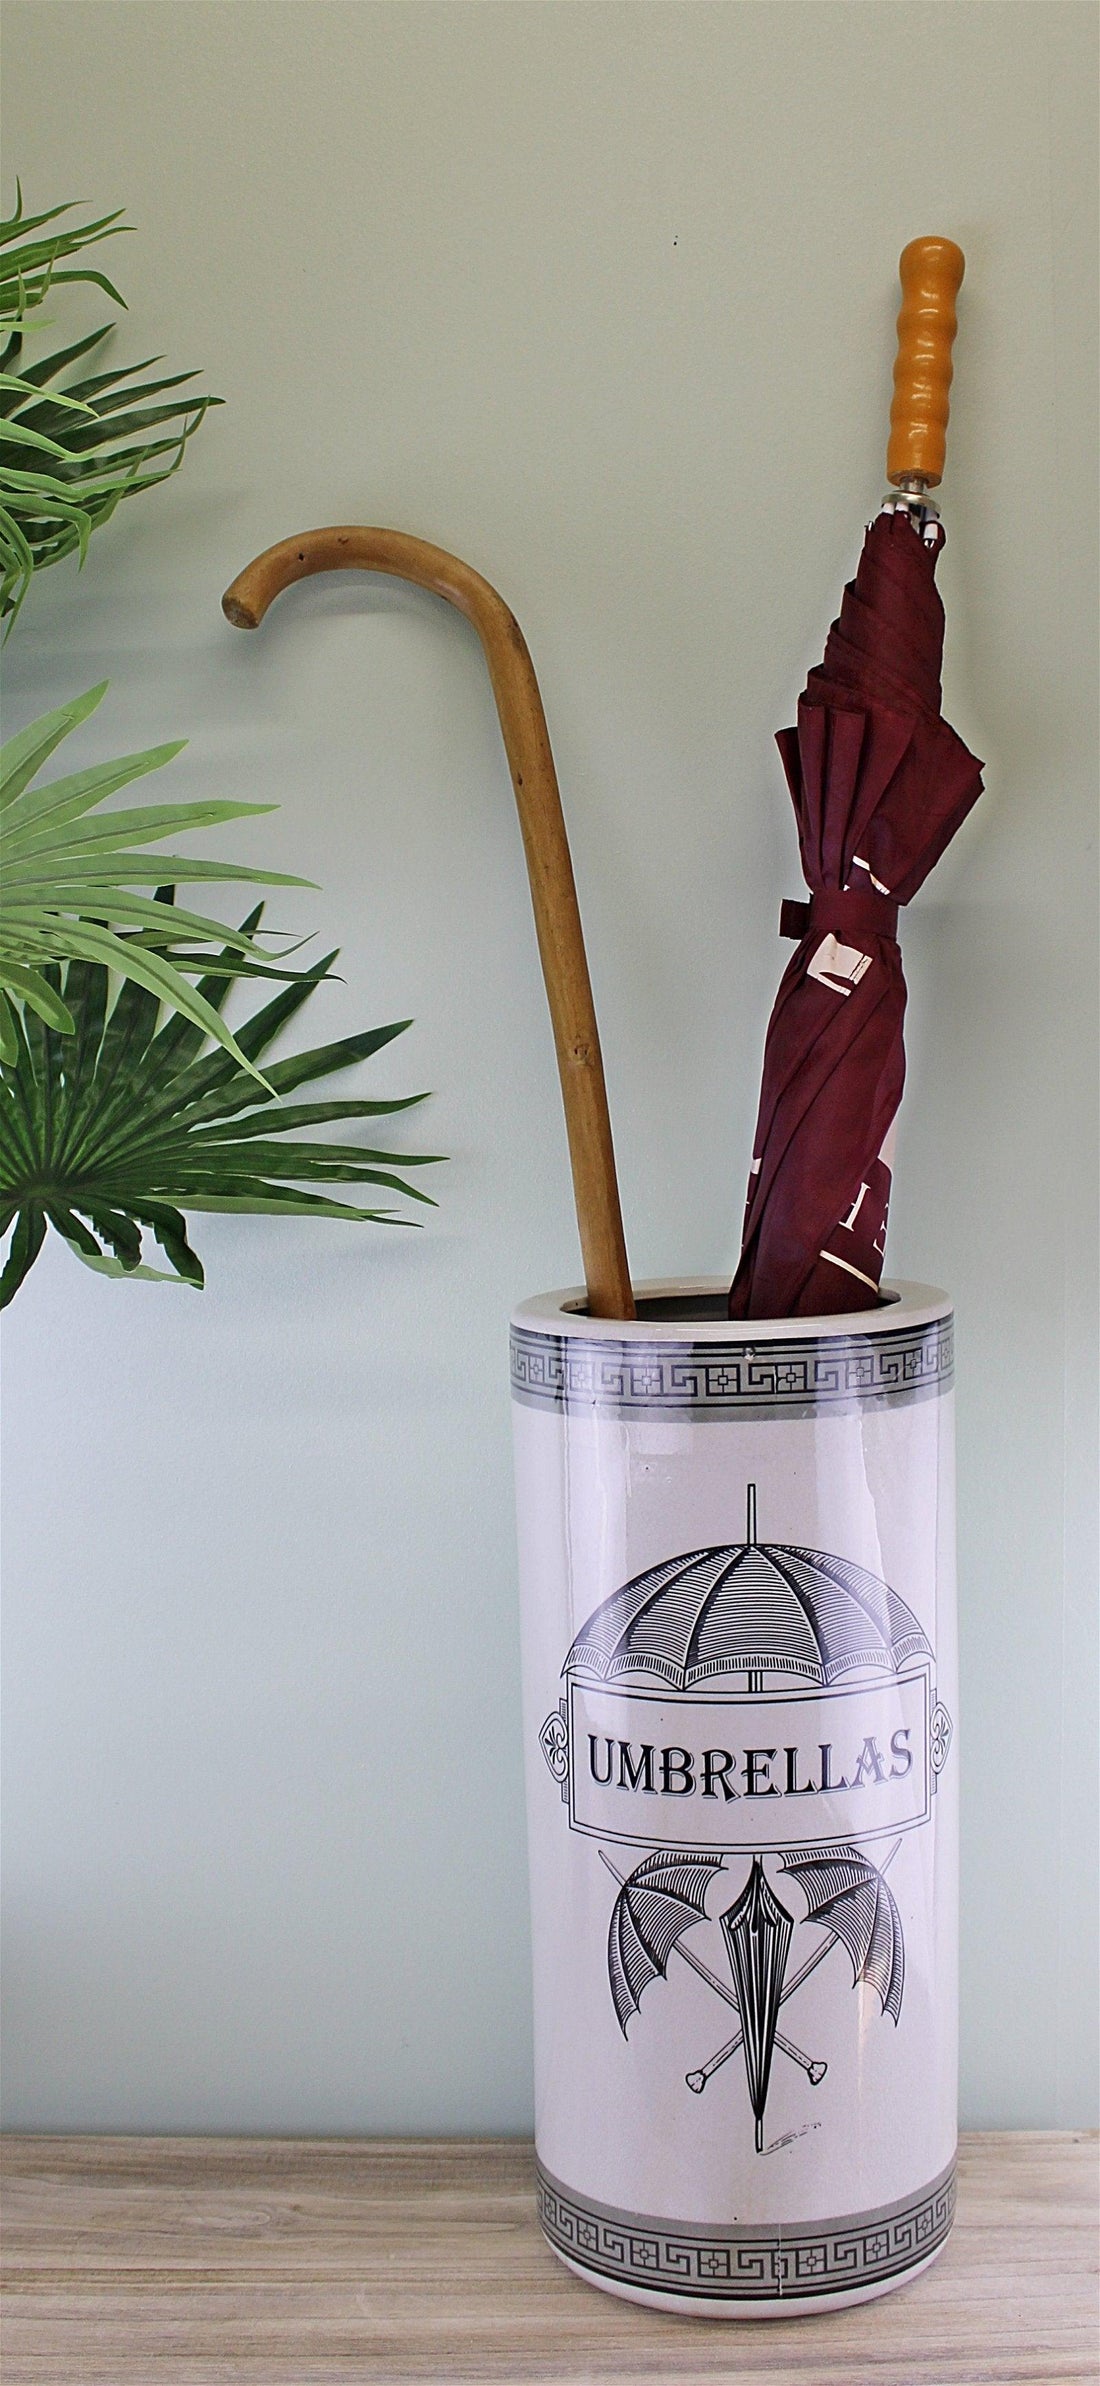 Ceramic Umbrella Stand, Monochrome Umbrella Print - £70.99 - 